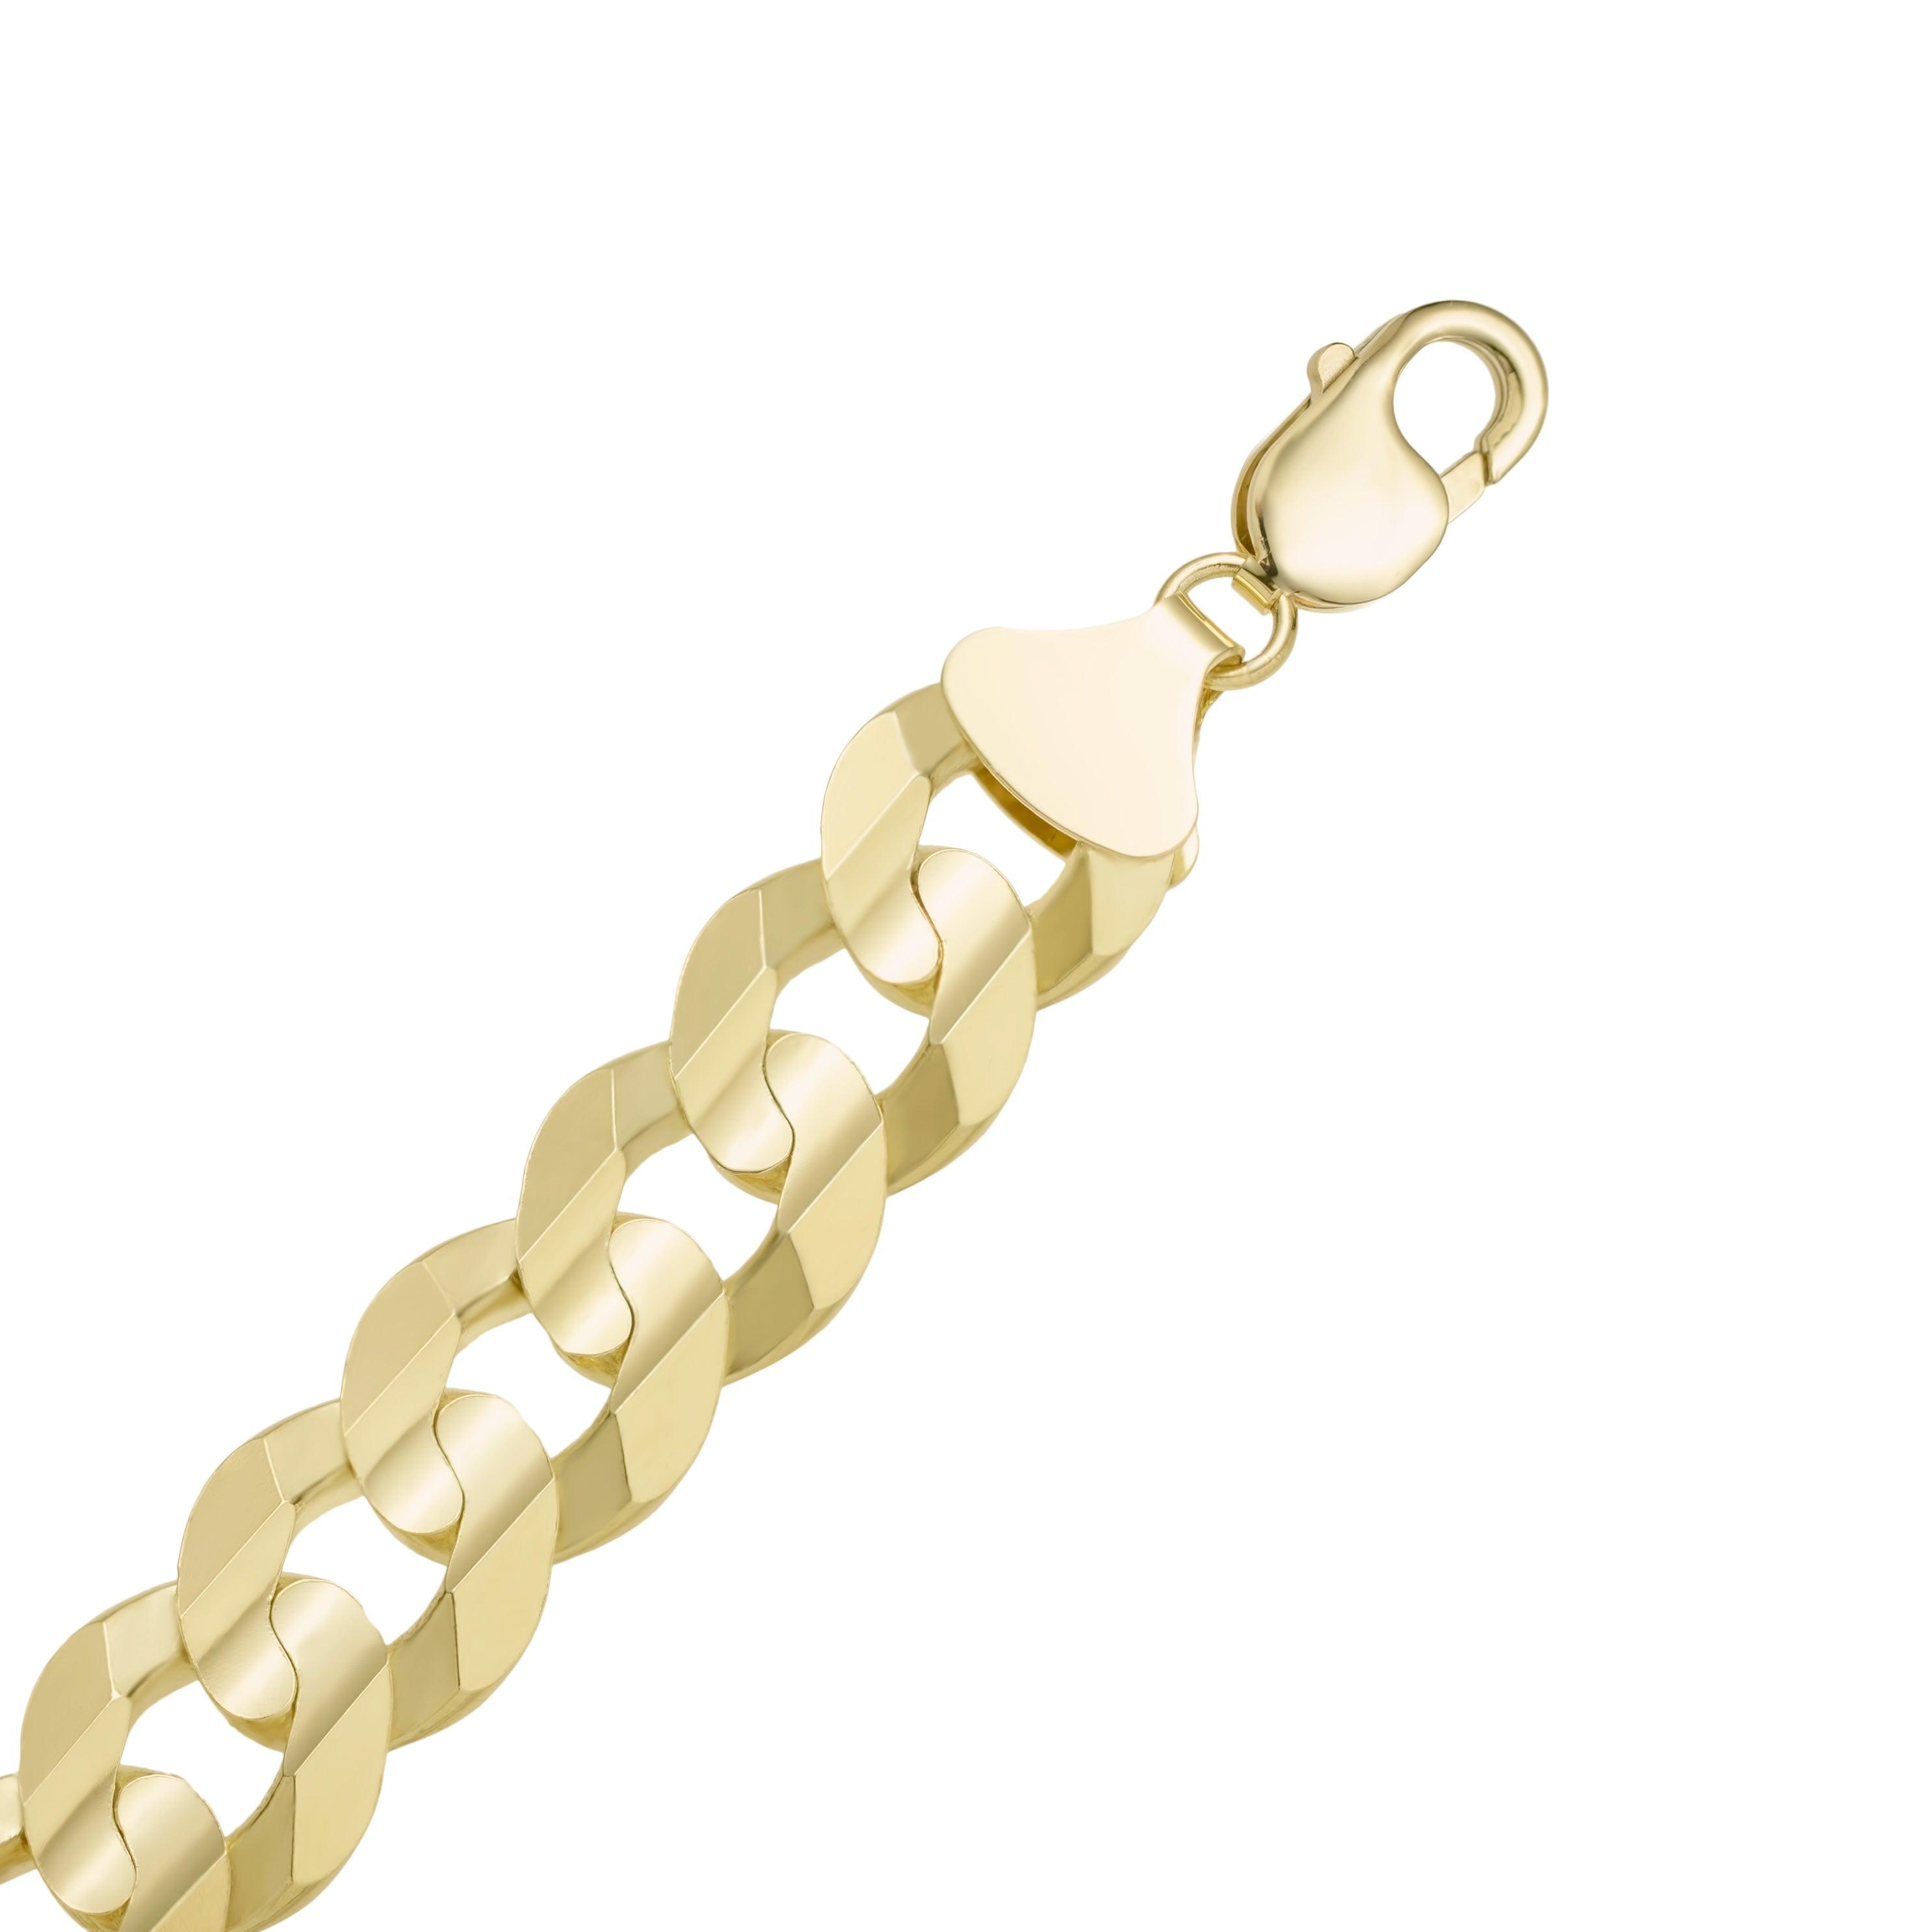 SOLID 9ct Yellow Gold Diamond Cut Rope Bracelet-3mm - 8.25